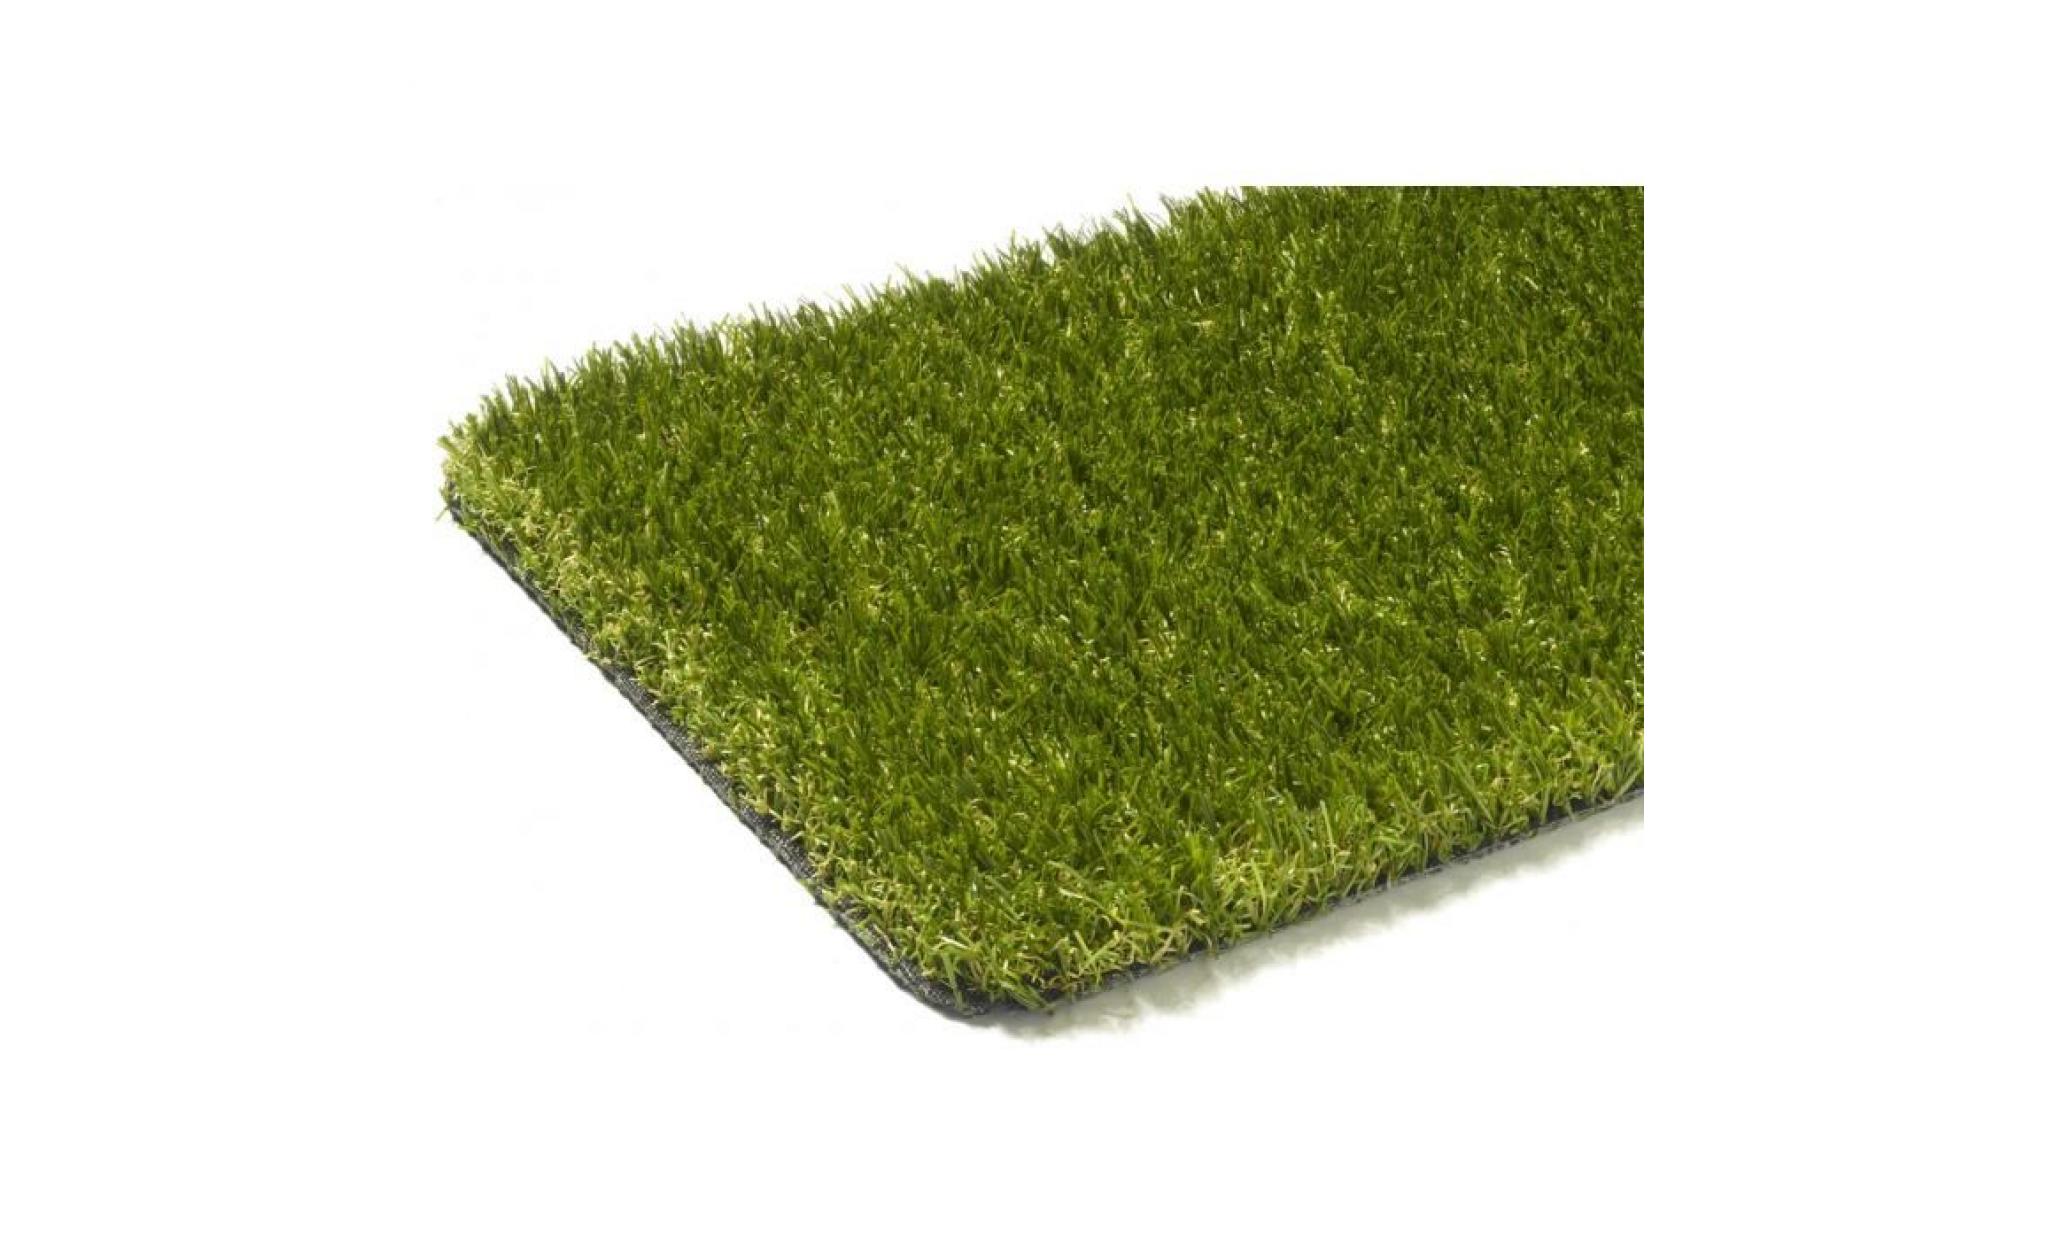 chelsea   tapis type luxe gazon artificiel – pour jardin, terrasse, balcon   vert  [200x350 cm]